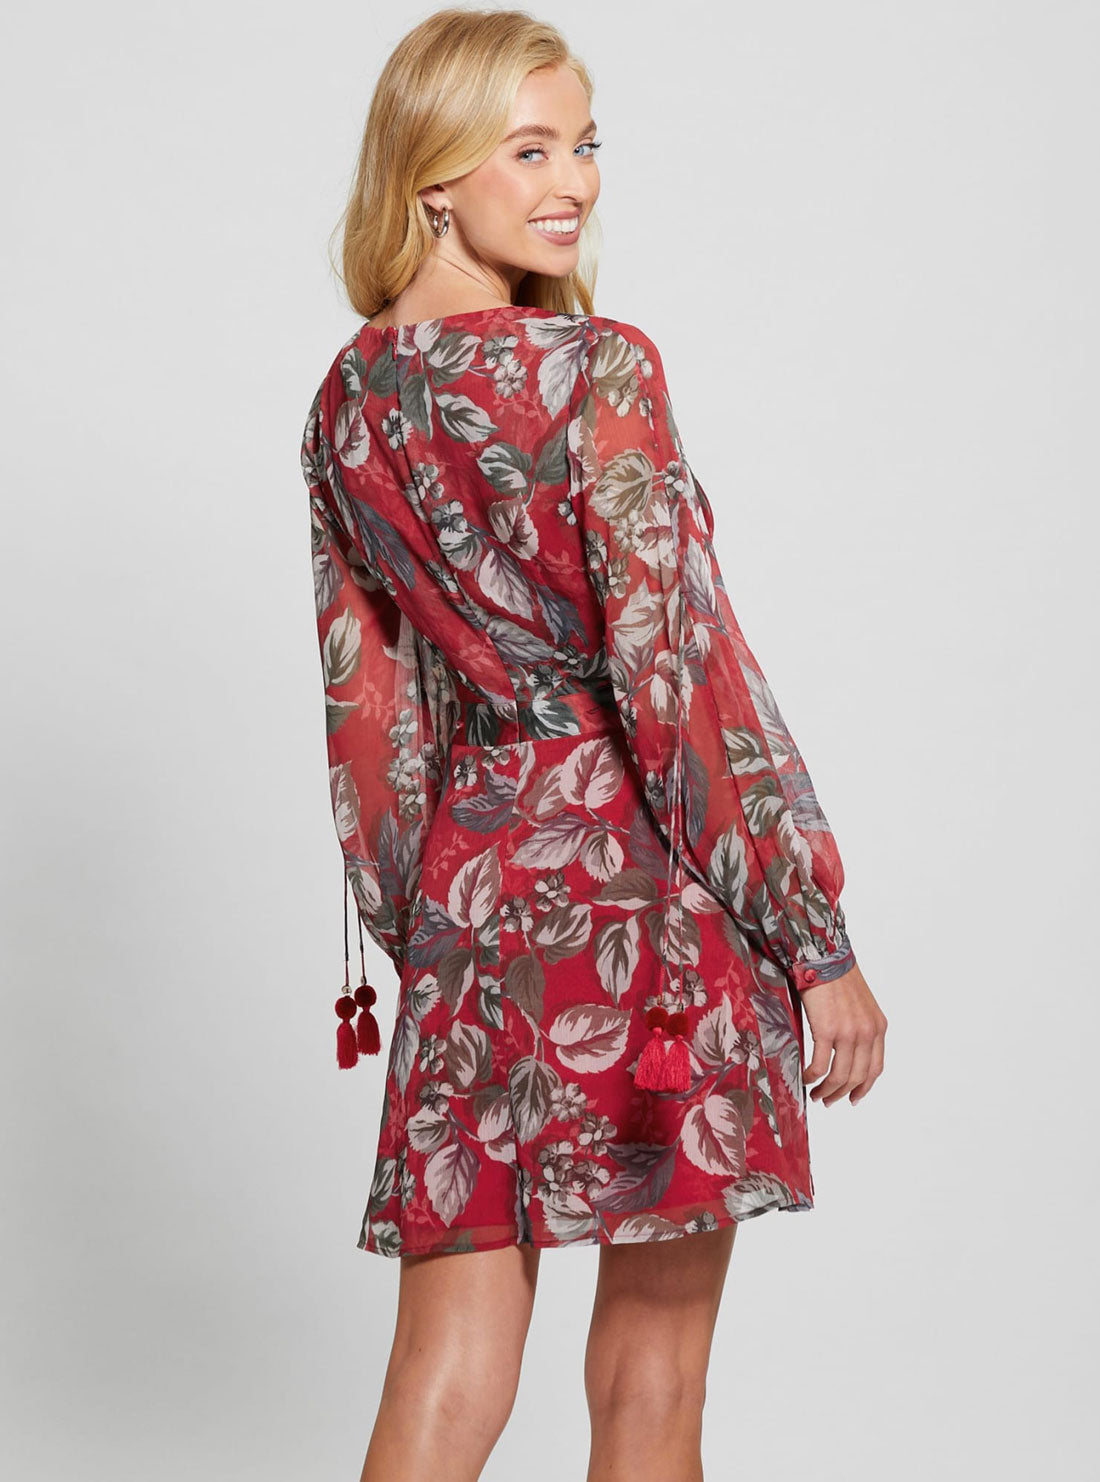 Red Floral Farrah Multi Dress | GUESS Women's Apparel | back view mini